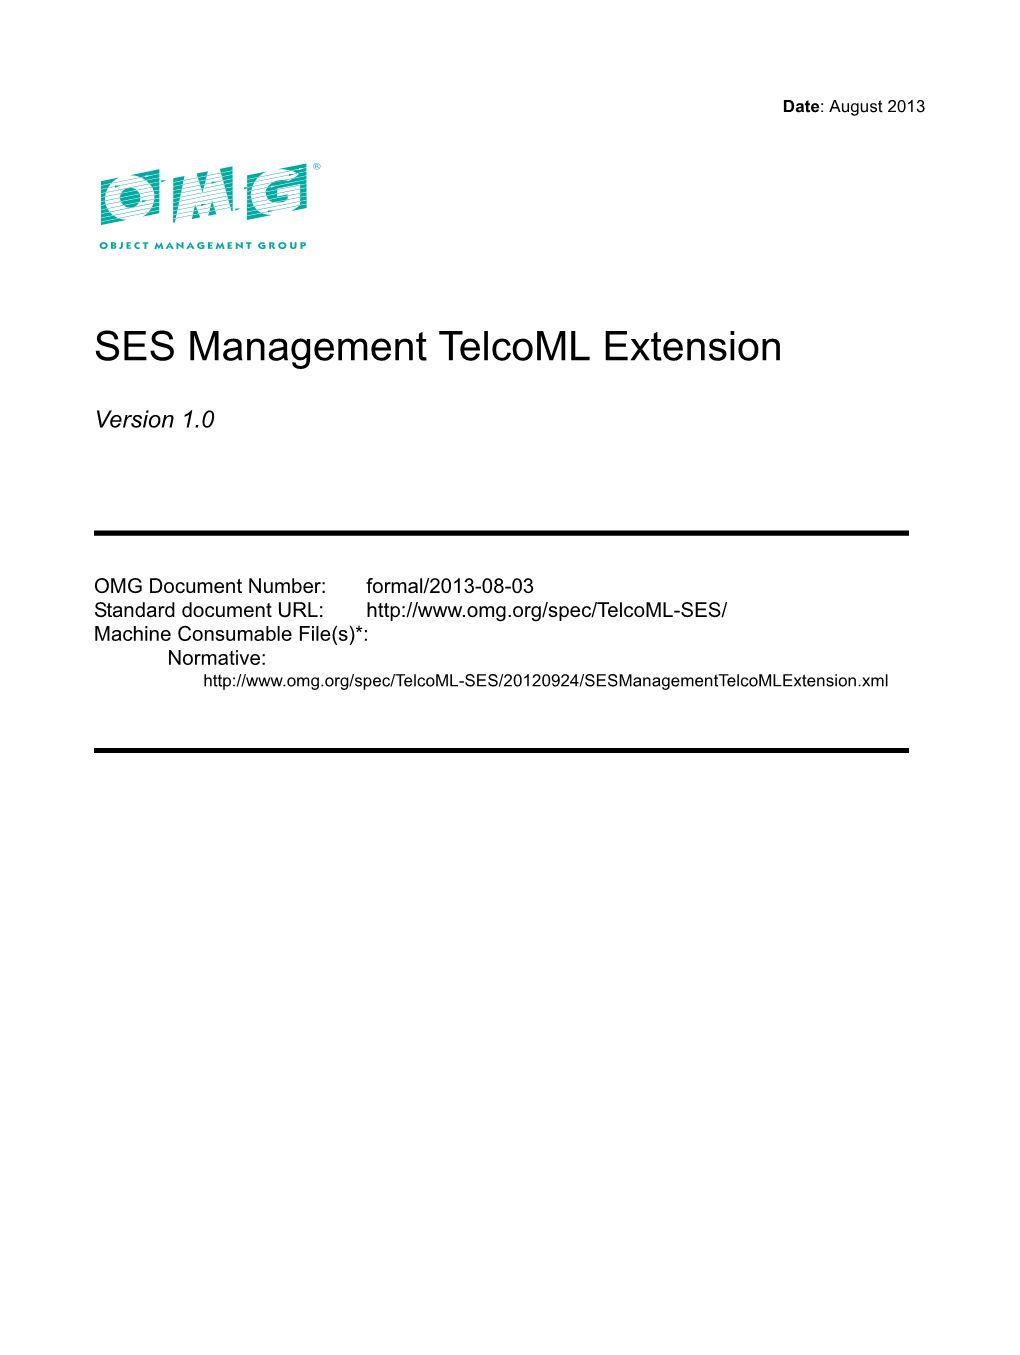 SES Management Telcoml Extension